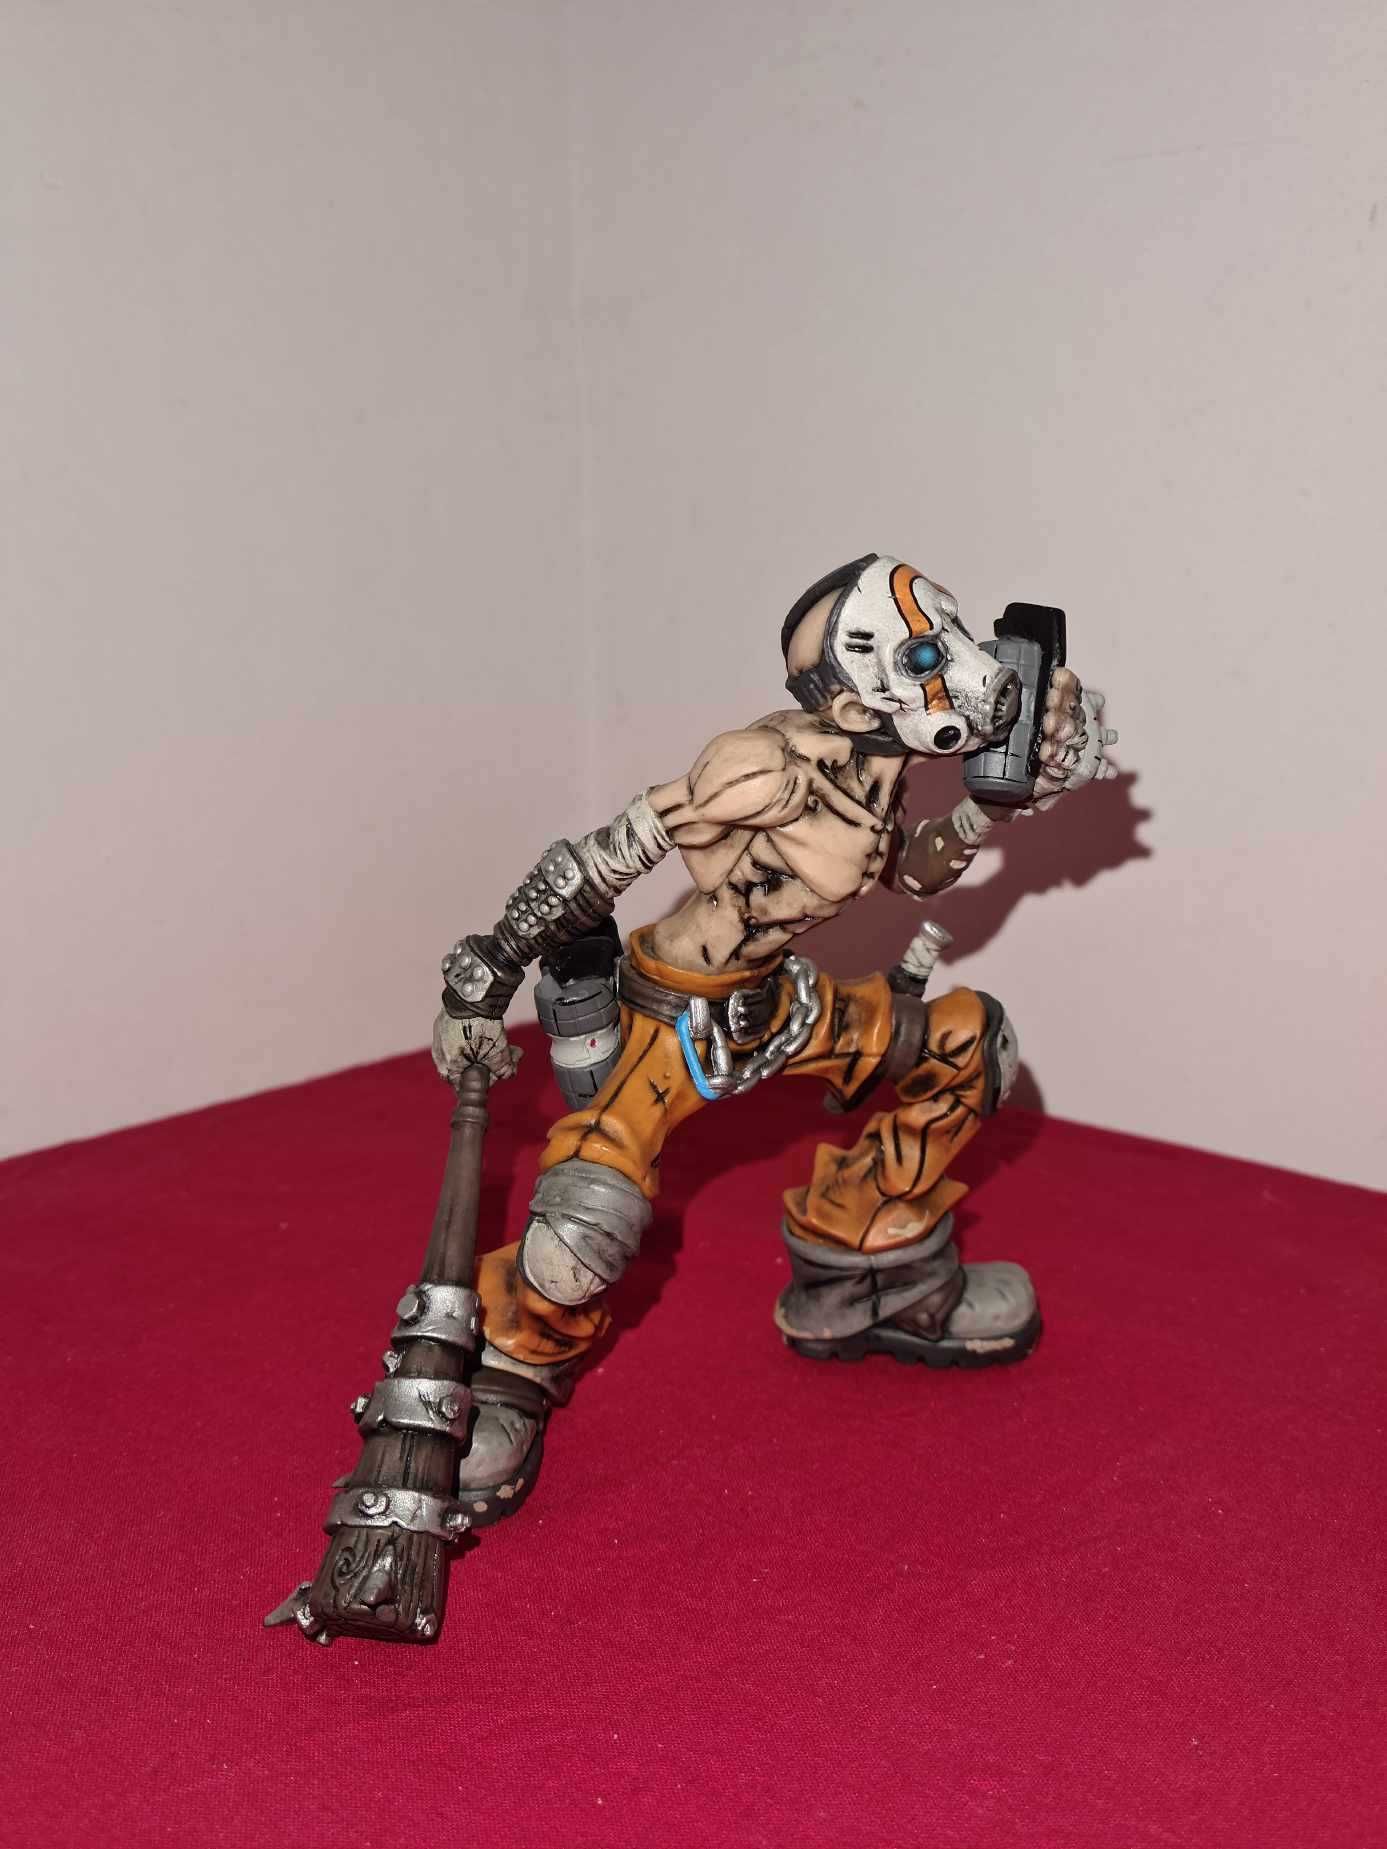 Vand statueta "Weta Games: Borderlands -
Psycho Bandit 20 cm"